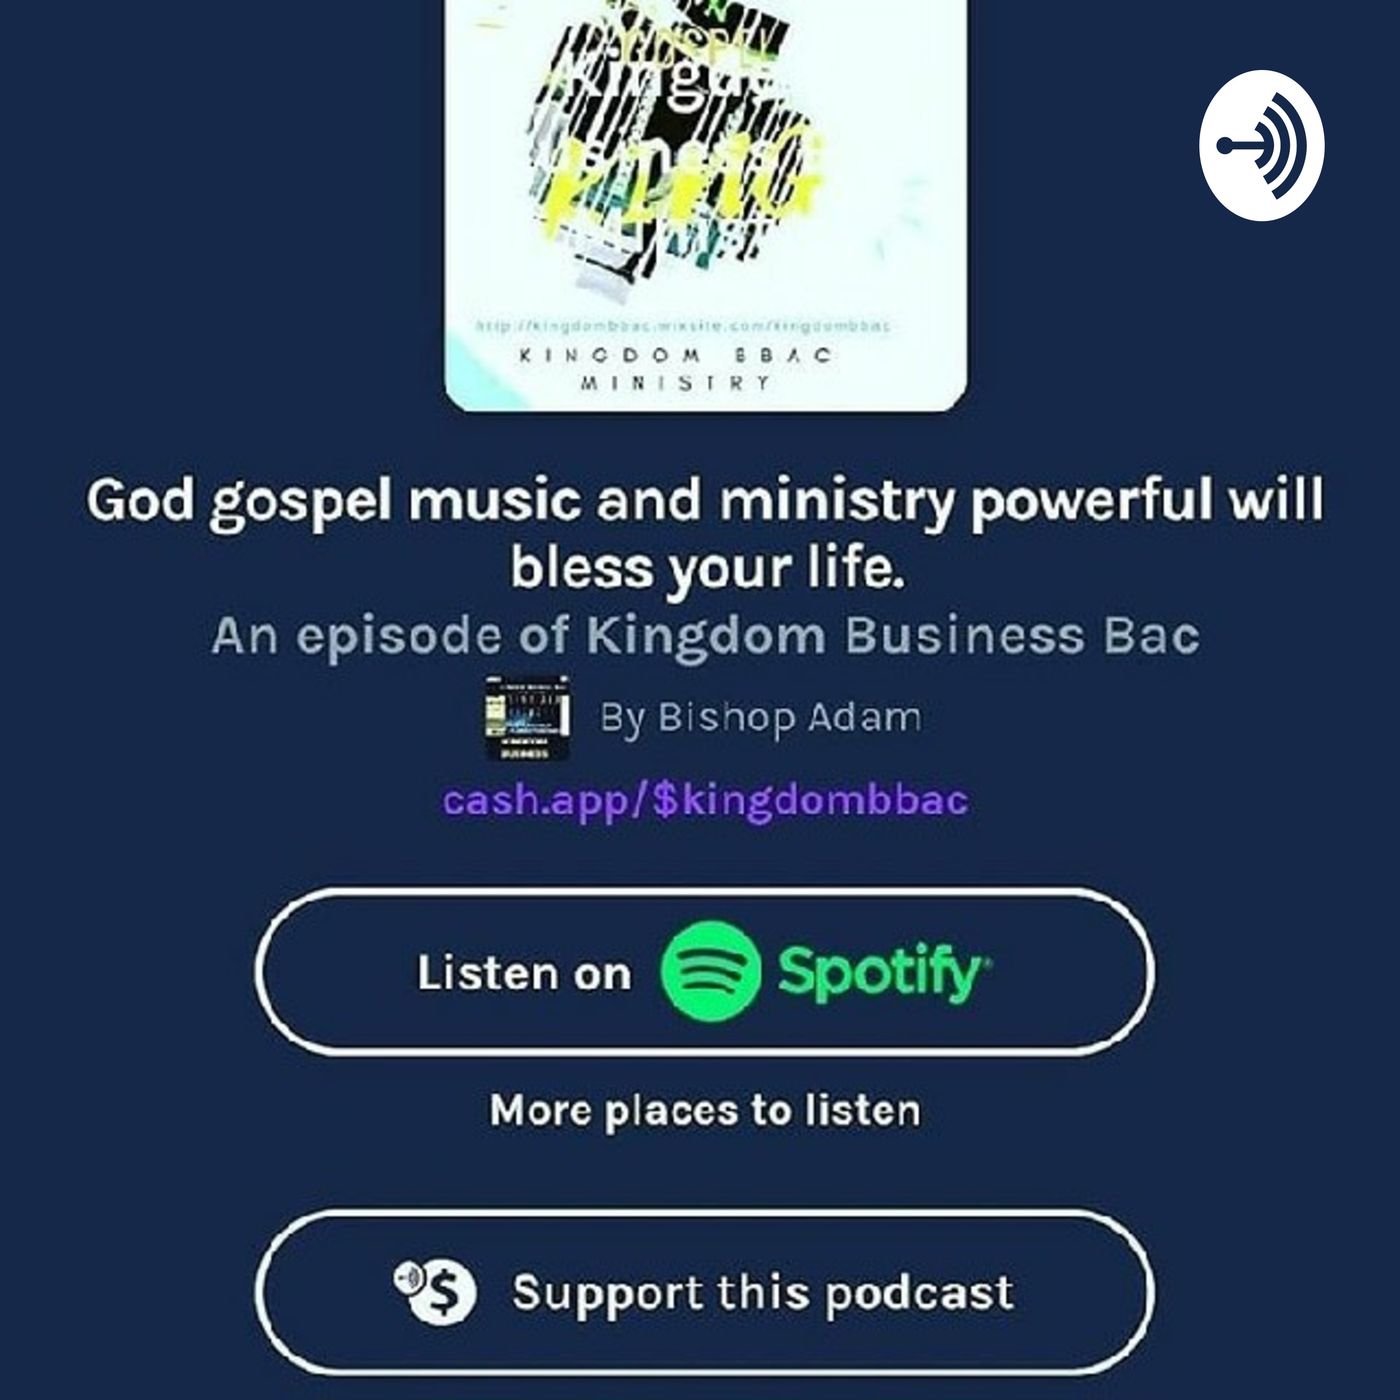 Kingdom Business Bac Podcast. Cash App ( $kingdombbac2